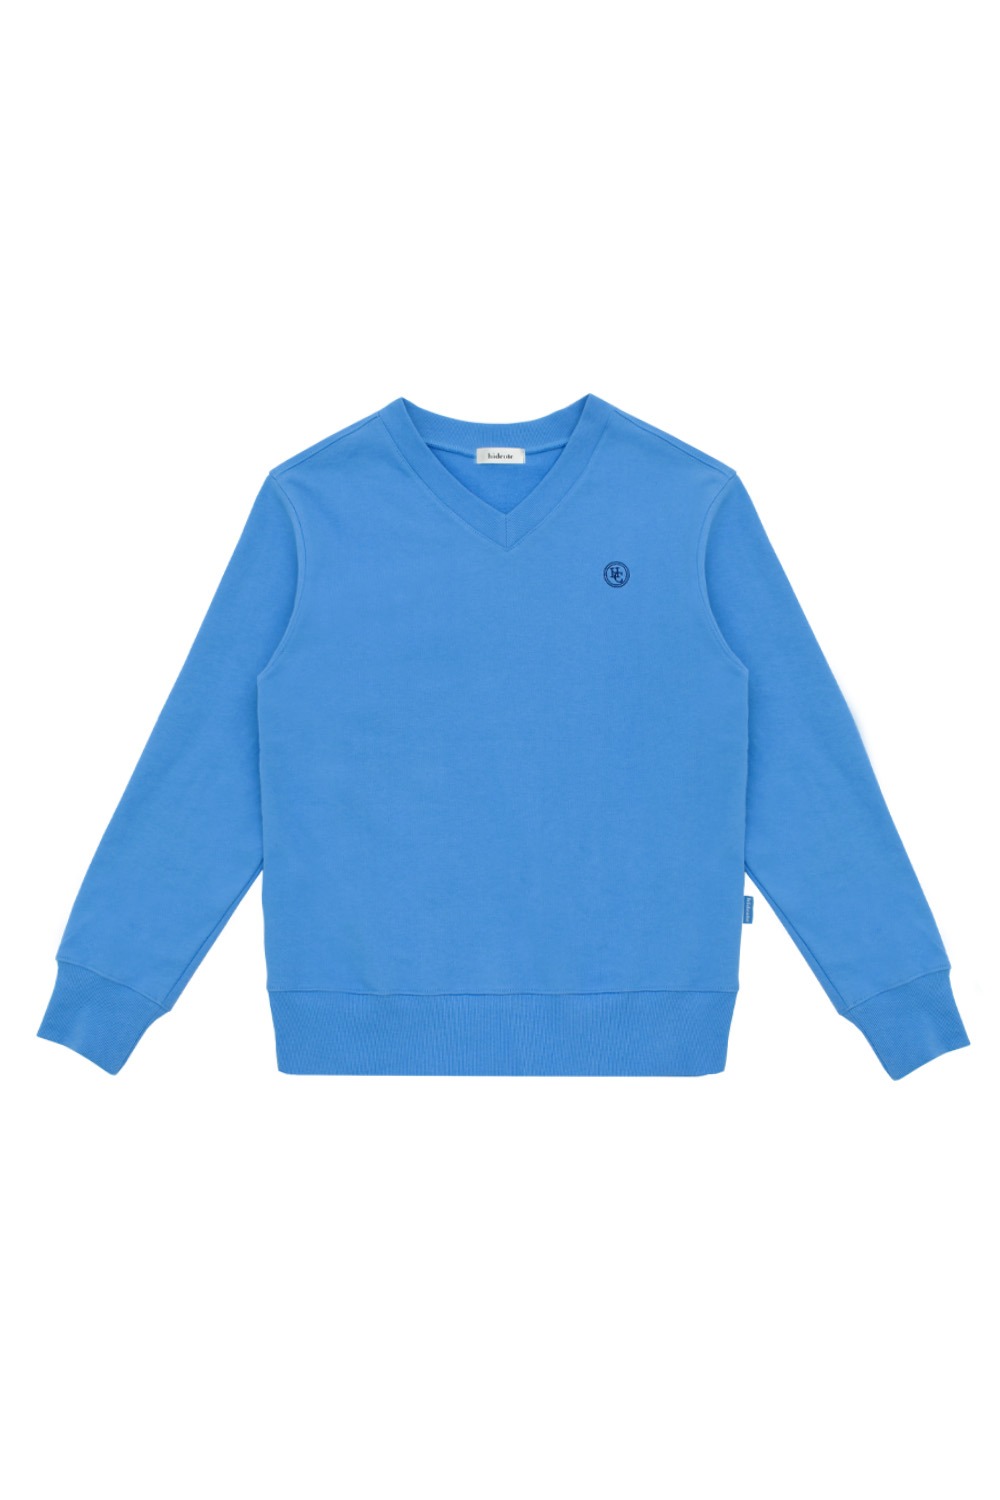 dress up sweatshirt (blue) RICHEZ